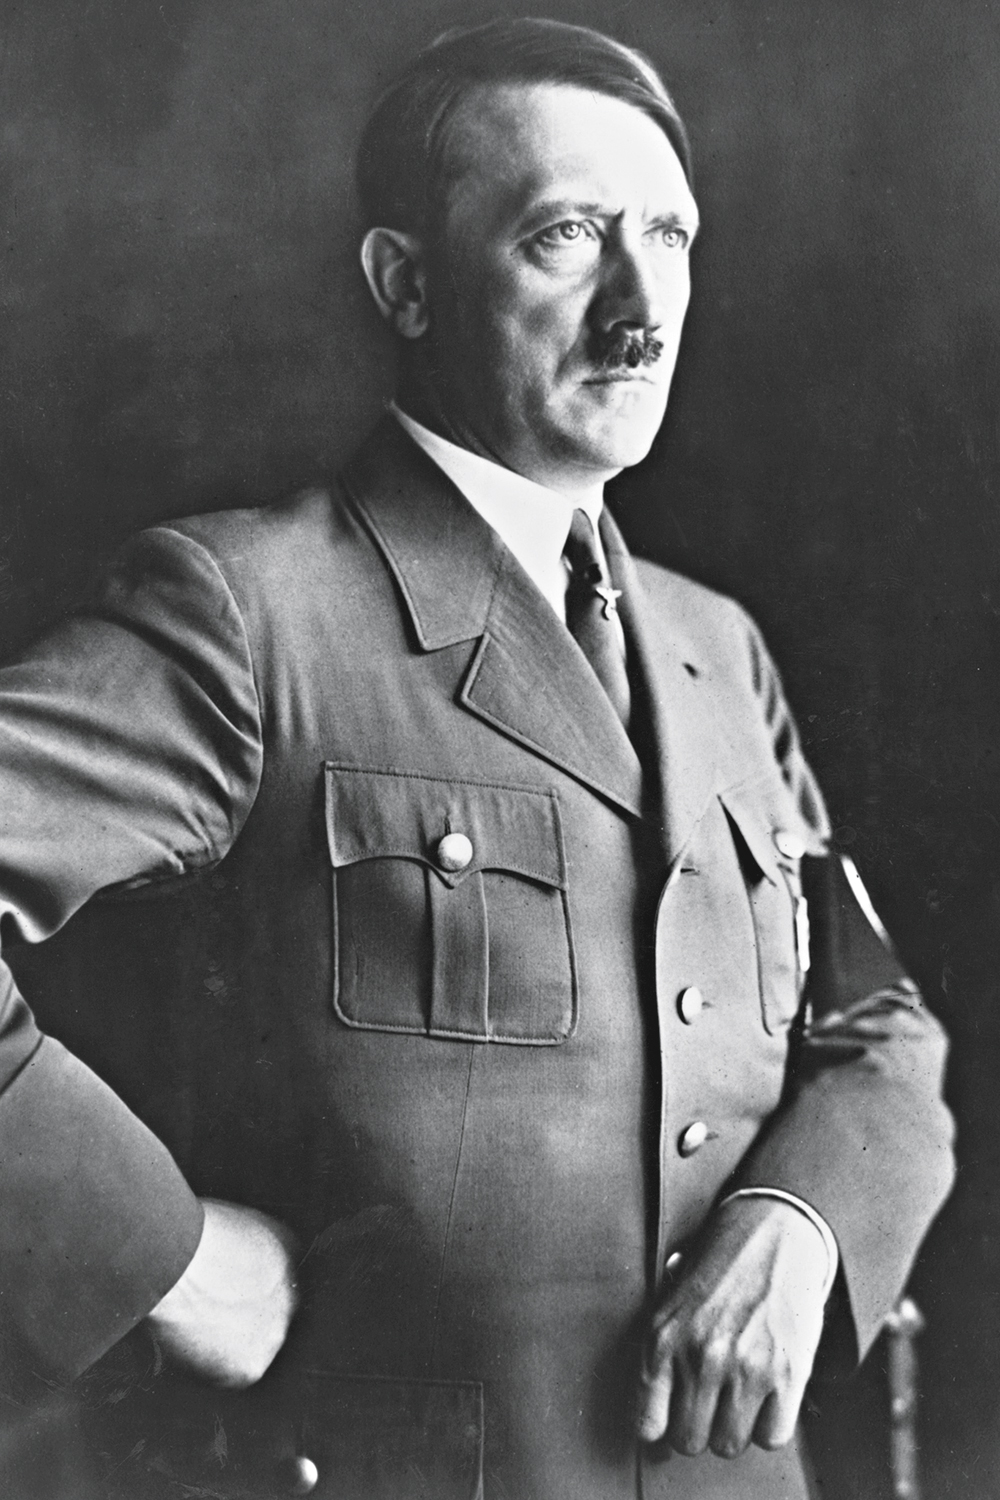 O LADO NAZISTA - Hitler: arrogante e altivo, mas capaz de se unir ao inimigo por seu projeto infame -